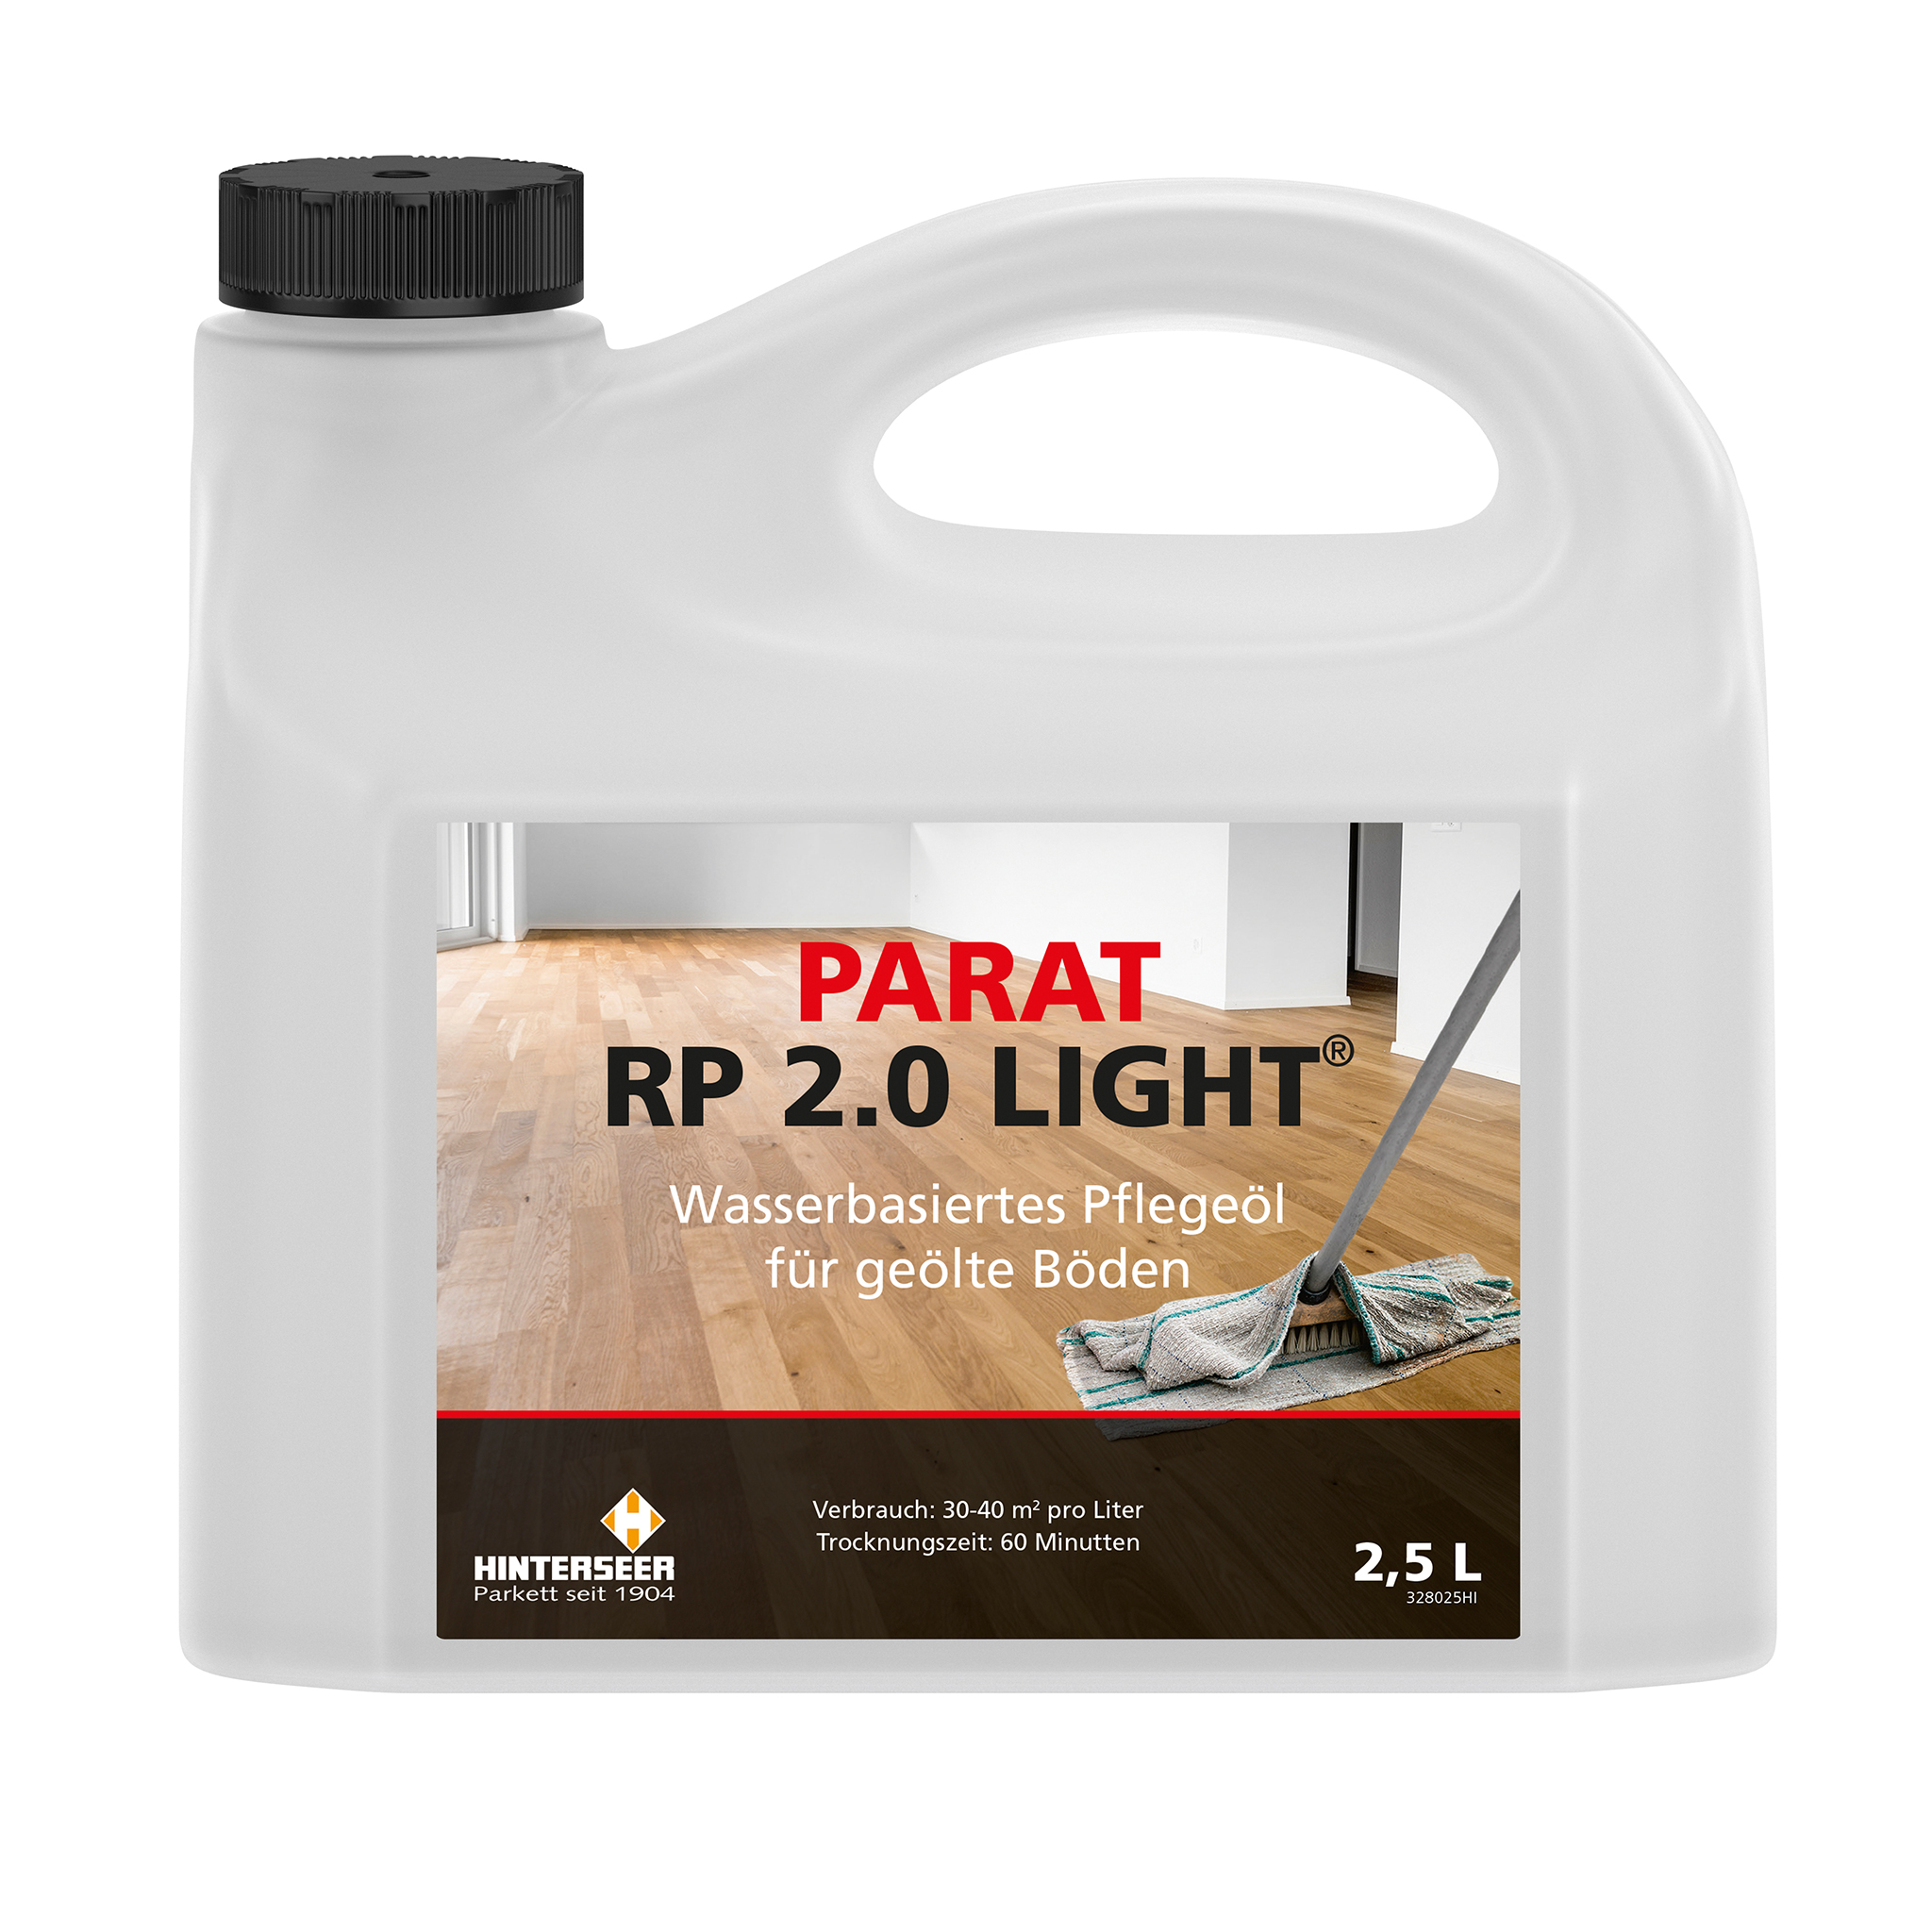 PARAT RP 2.0/1 Light pecovaci olej 2.5l